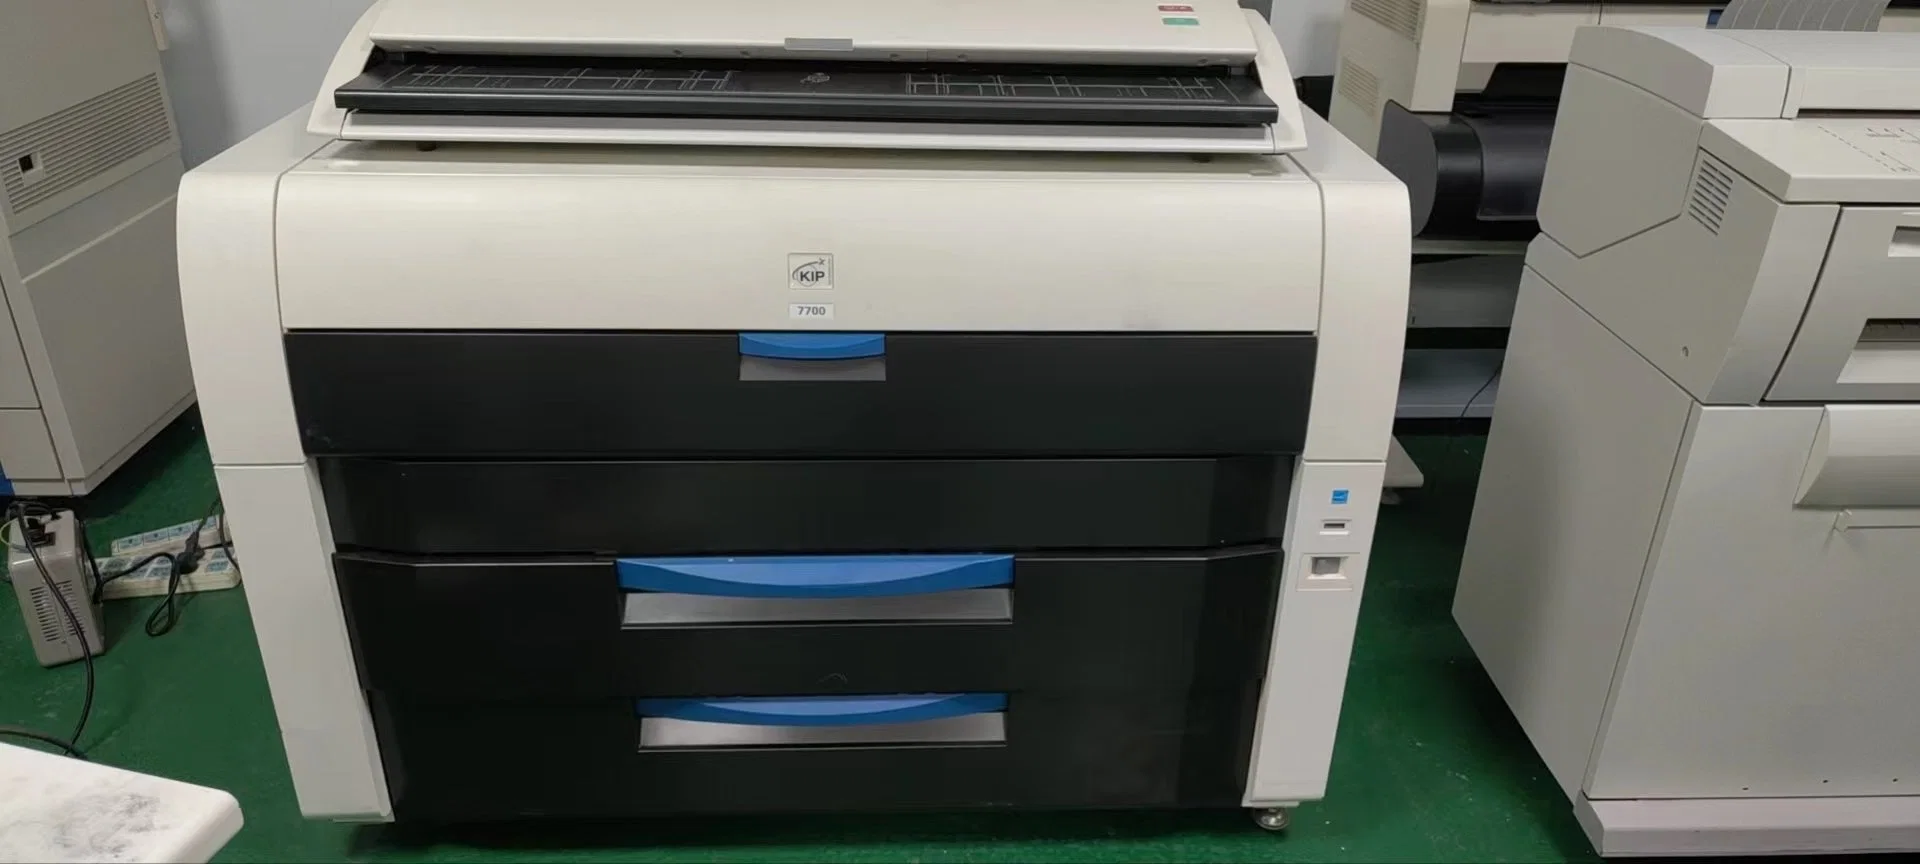 for Machine Kip 7700 Large Format Printer